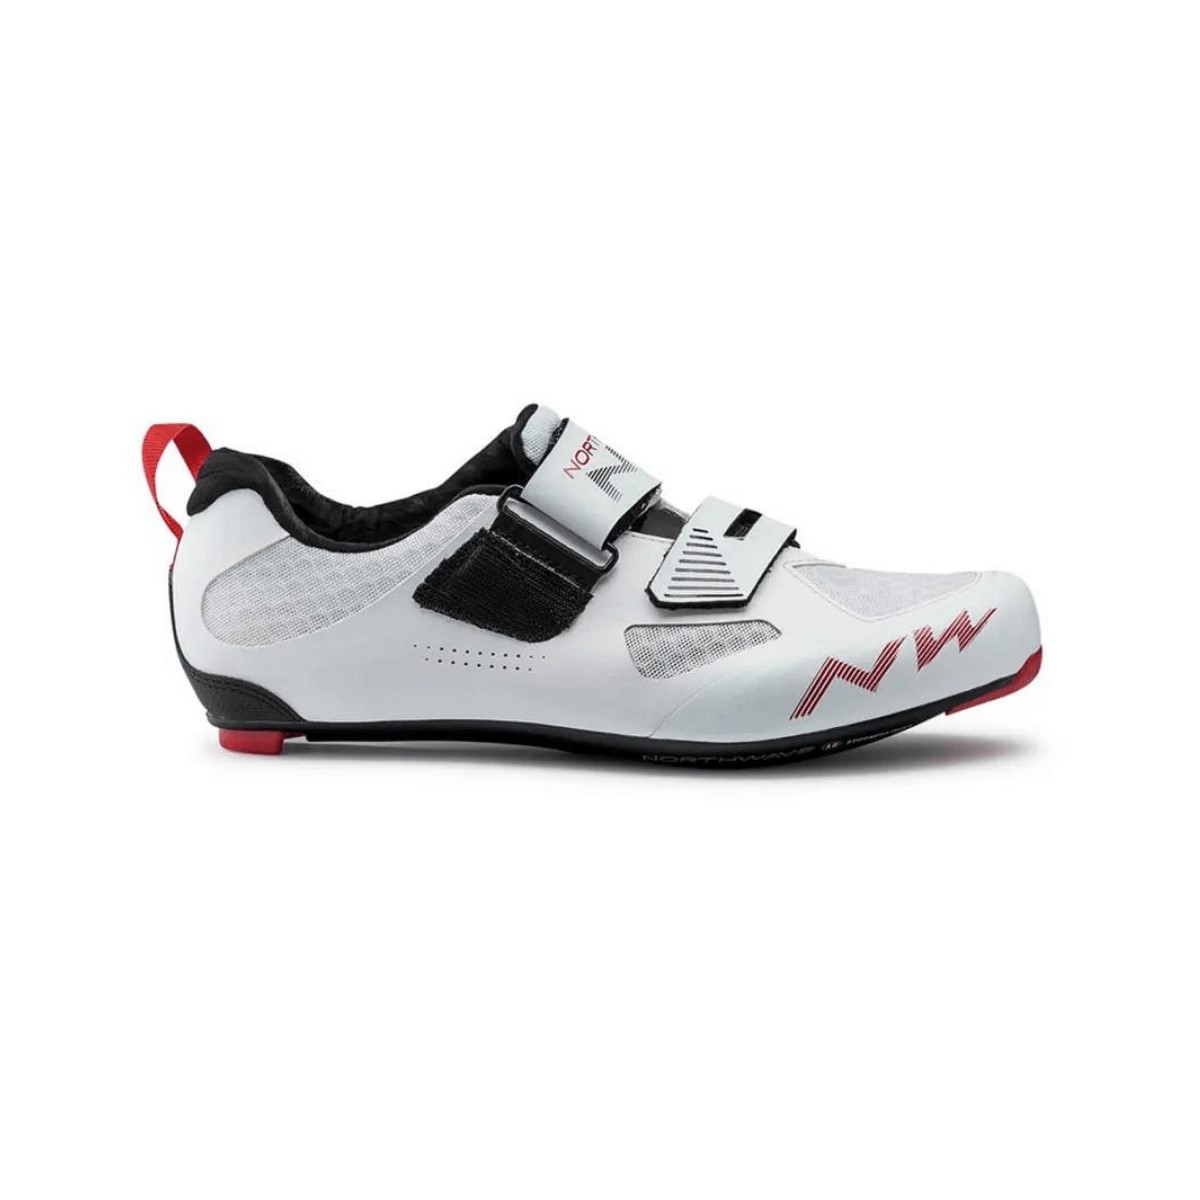 Chaussures Northwave Tribute 2 Carbon Triathlon Blanc, Taille 47 - EUR